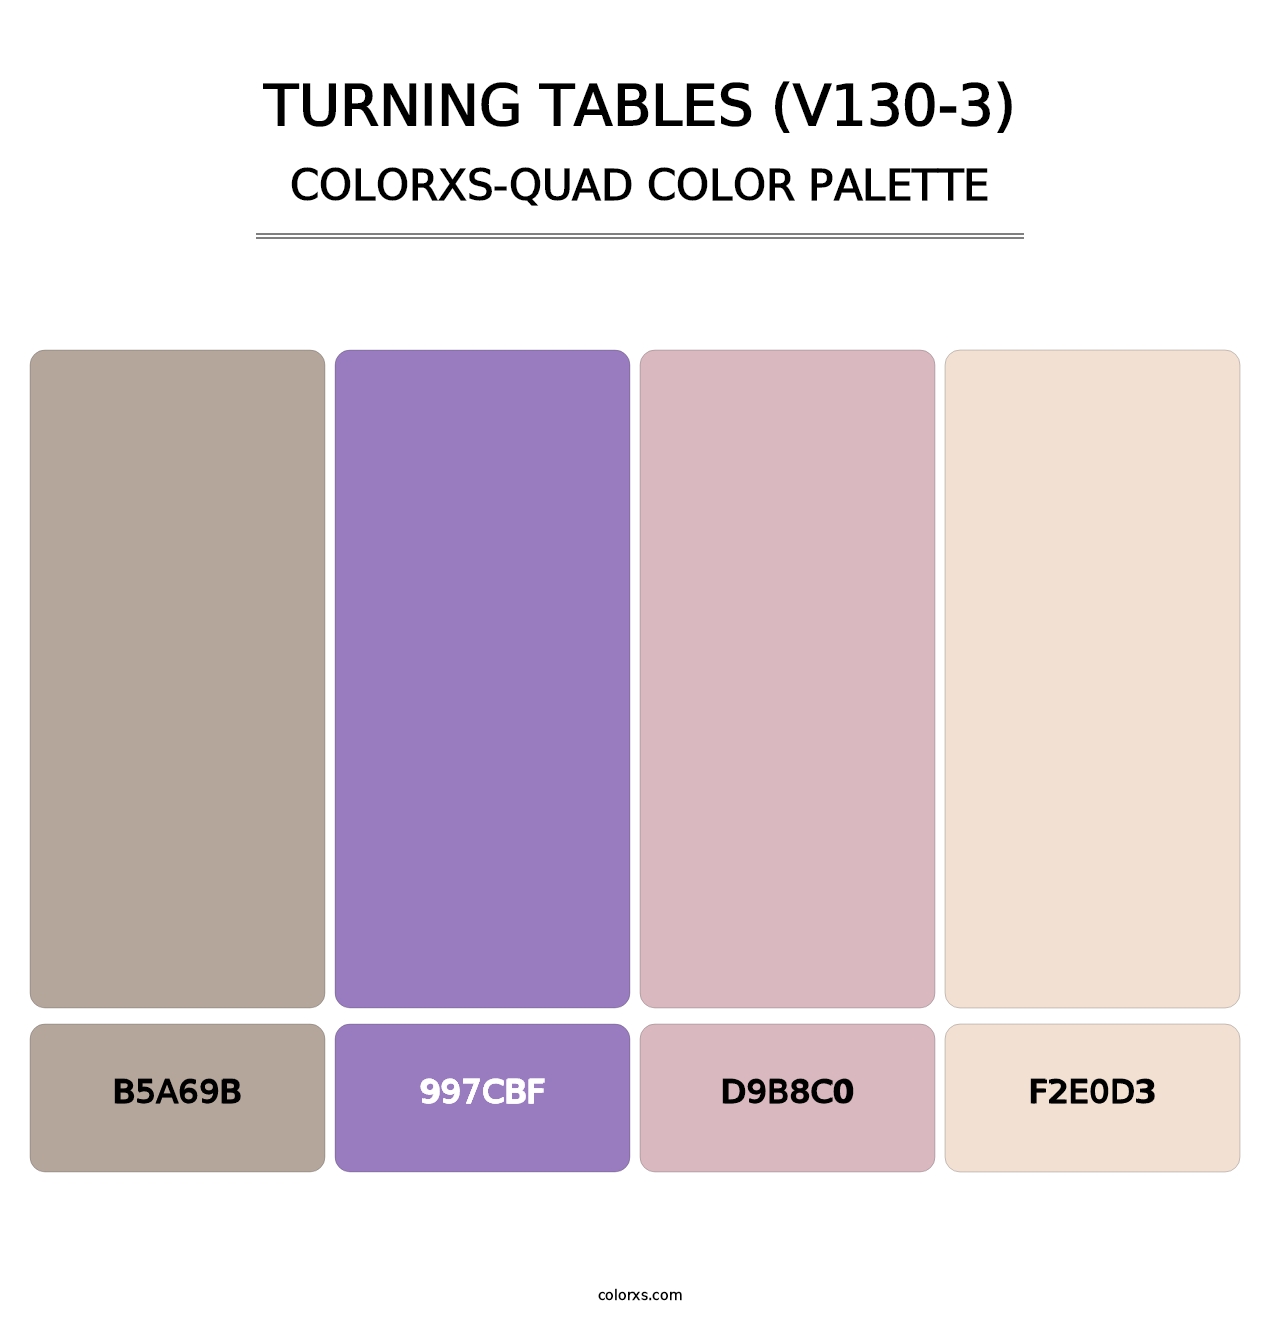 Turning Tables (V130-3) - Colorxs Quad Palette